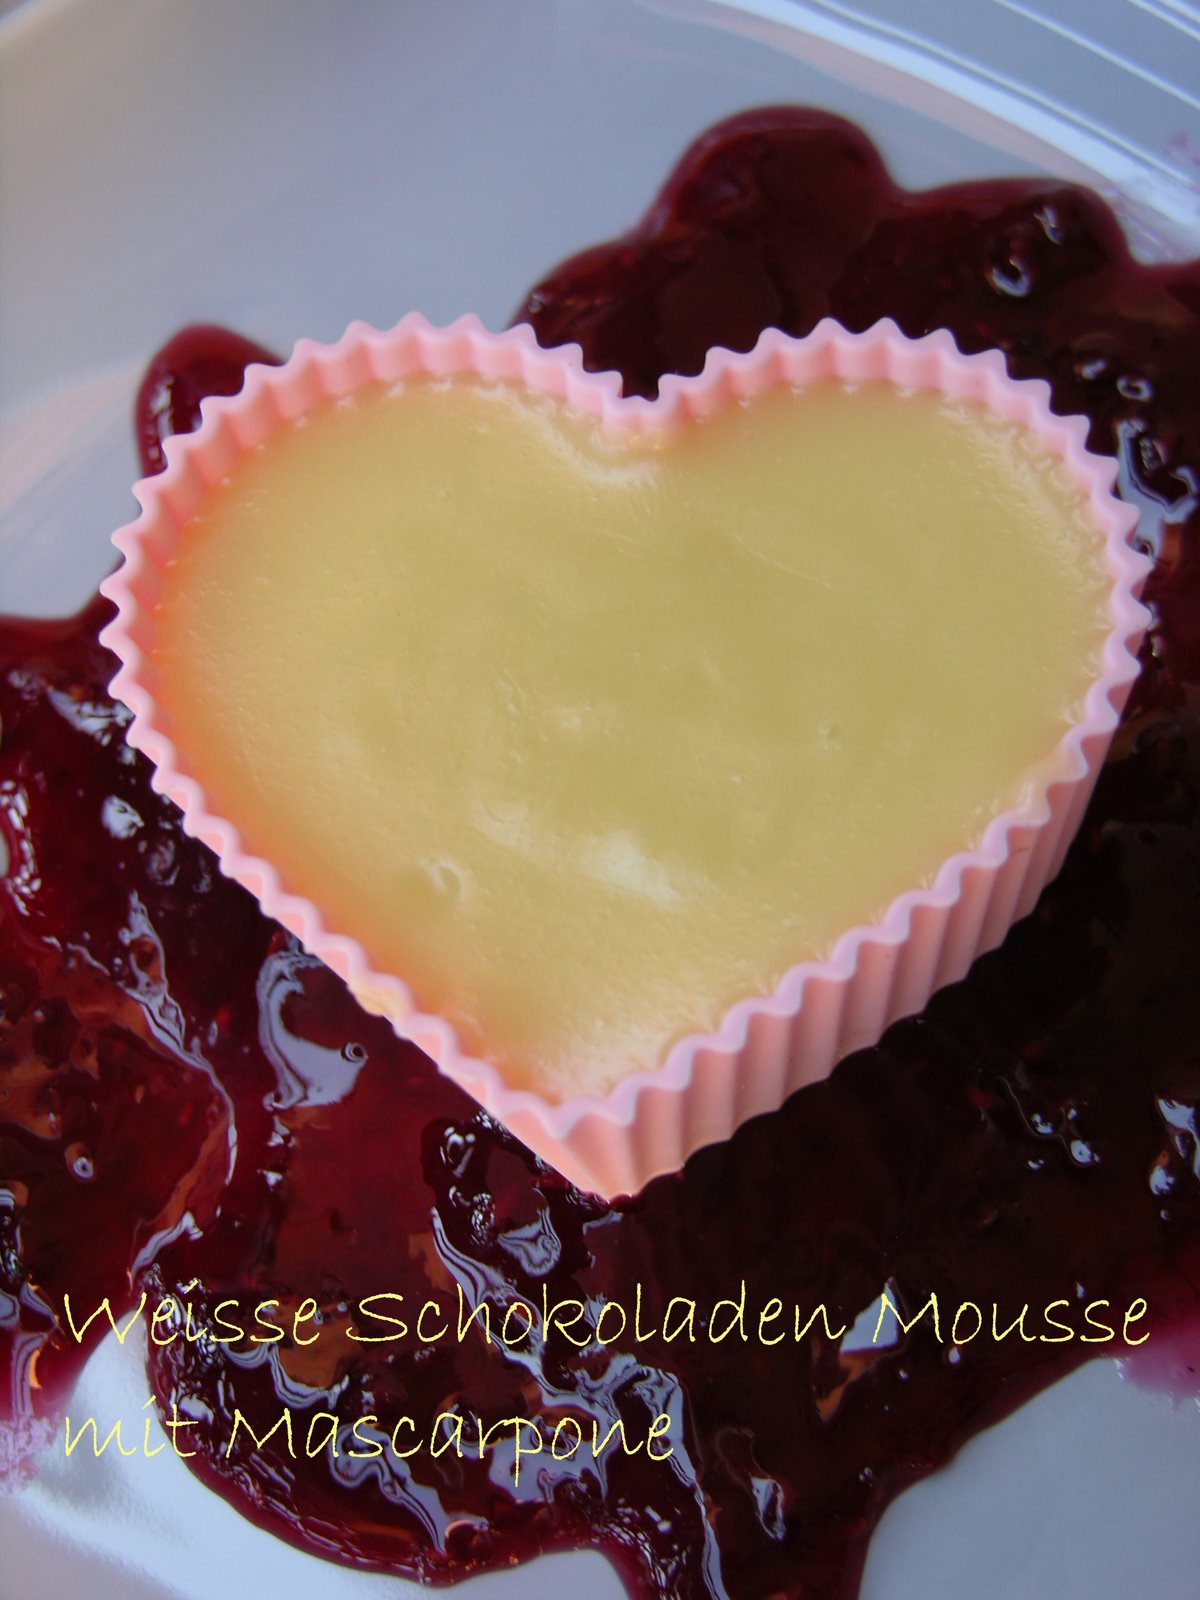 à la Dilek: Weisse Schokoladen-Mousse mit Mascarpone